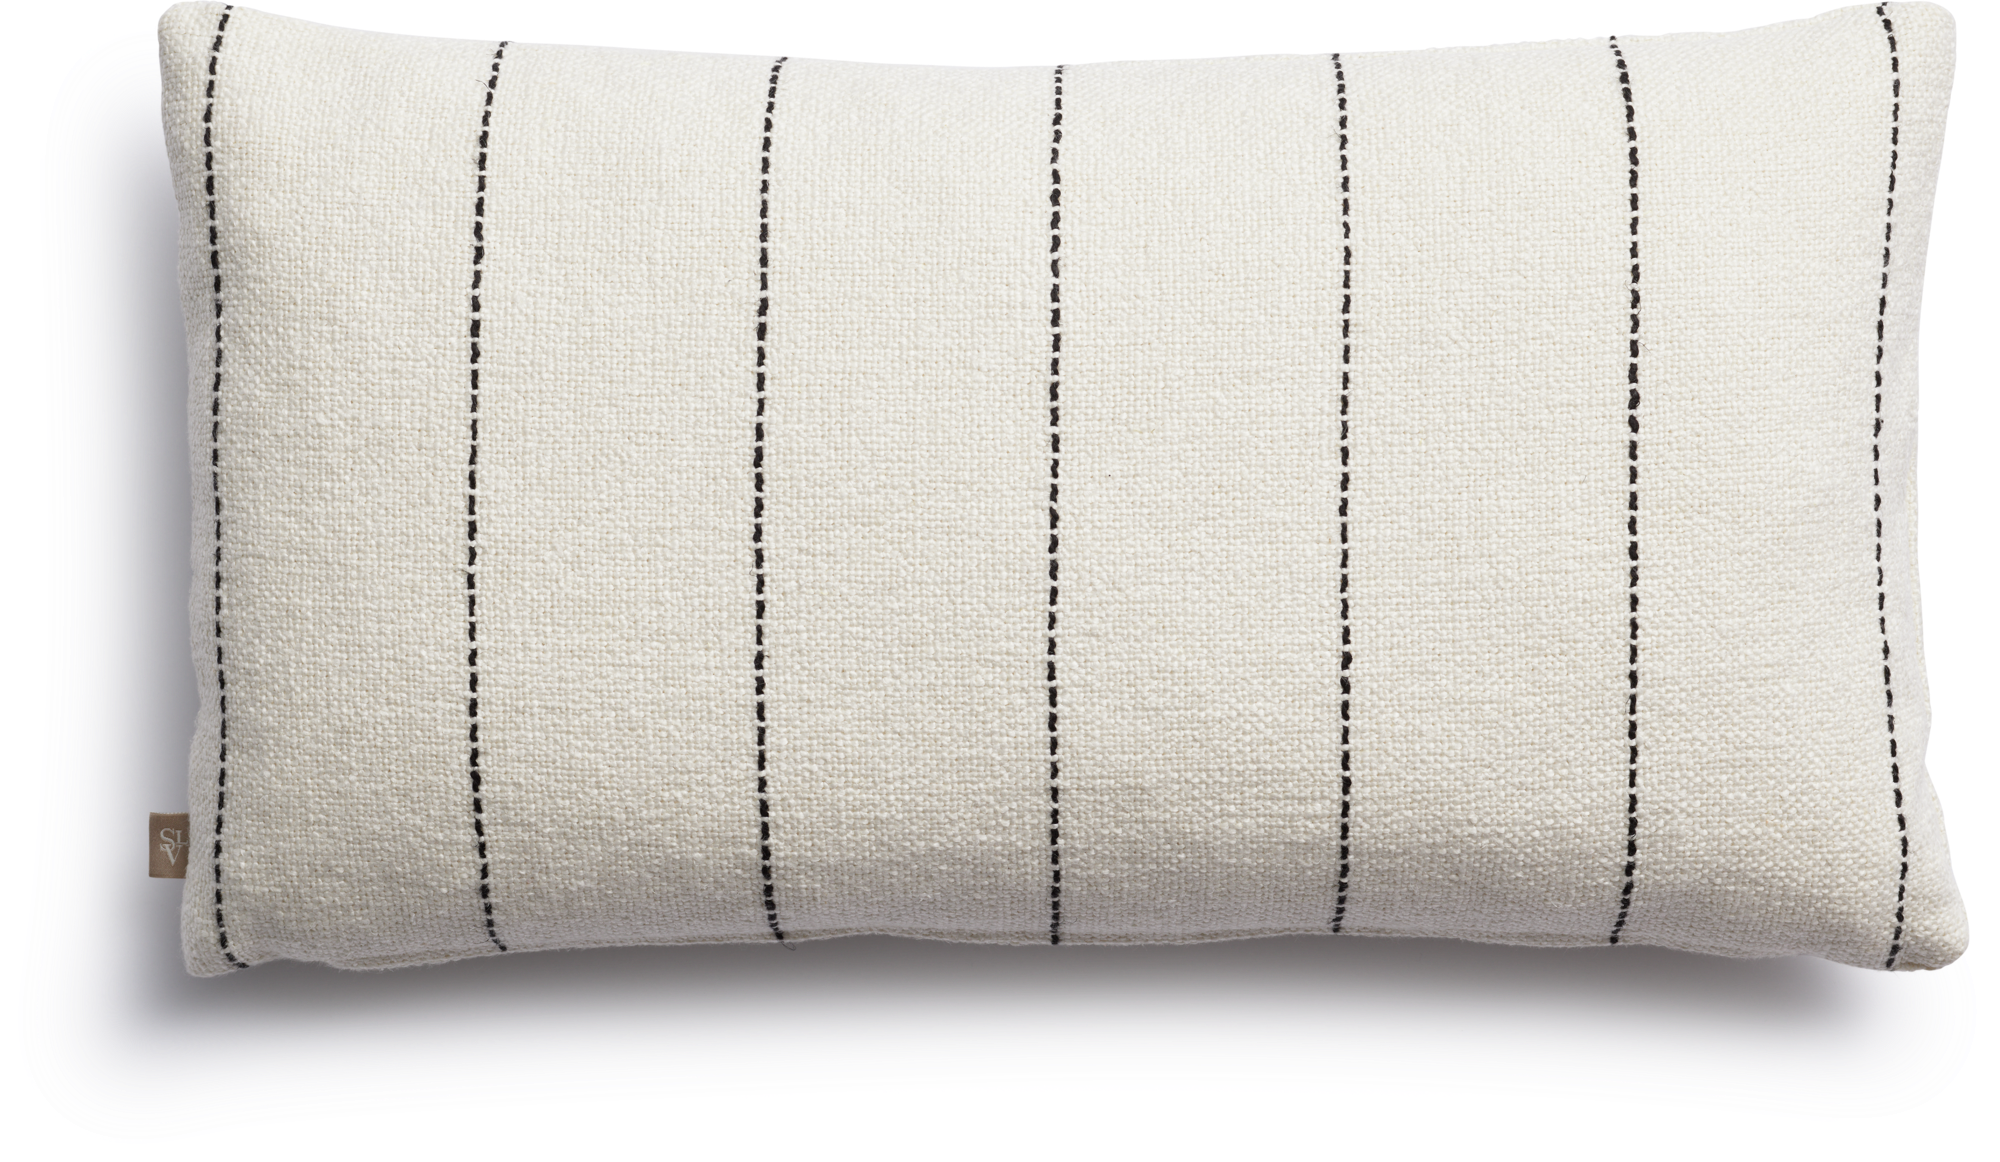 Frascarolo decorative pillow